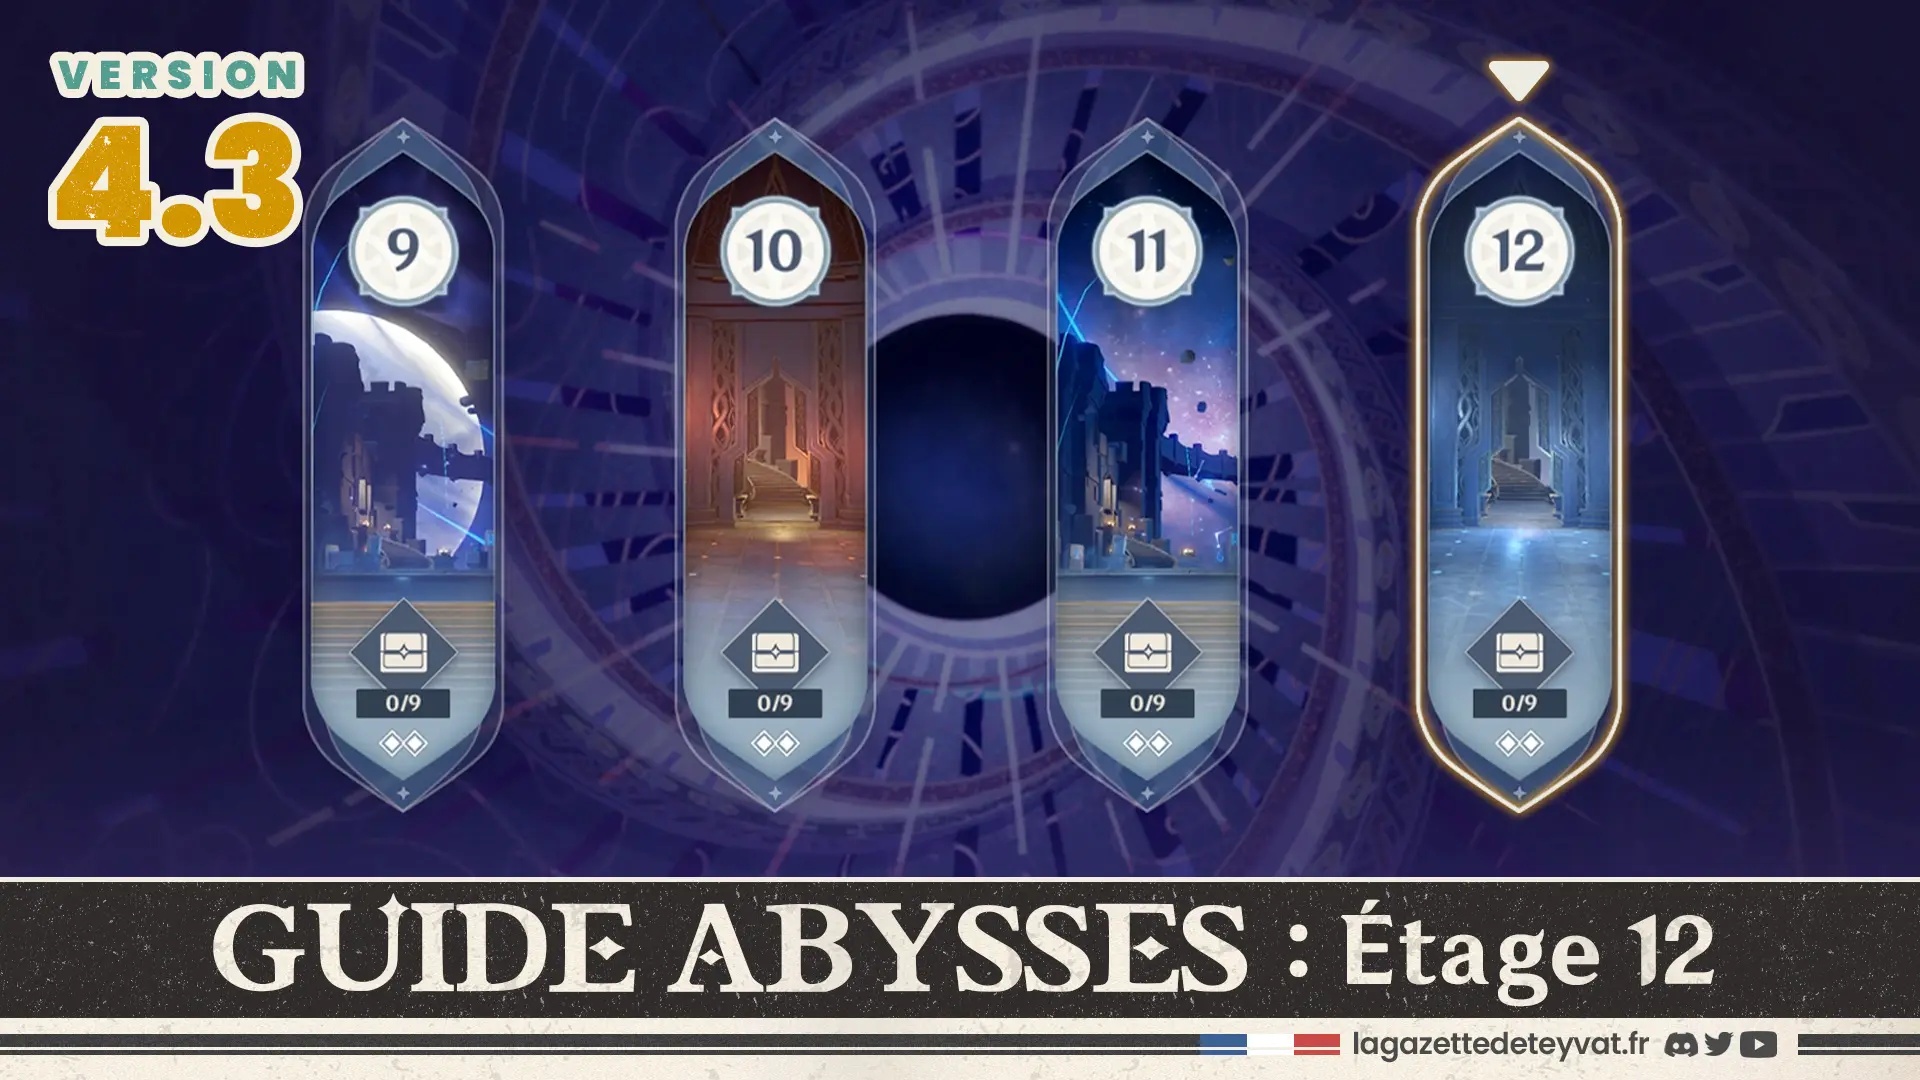 Abysses 4.3 étage 12